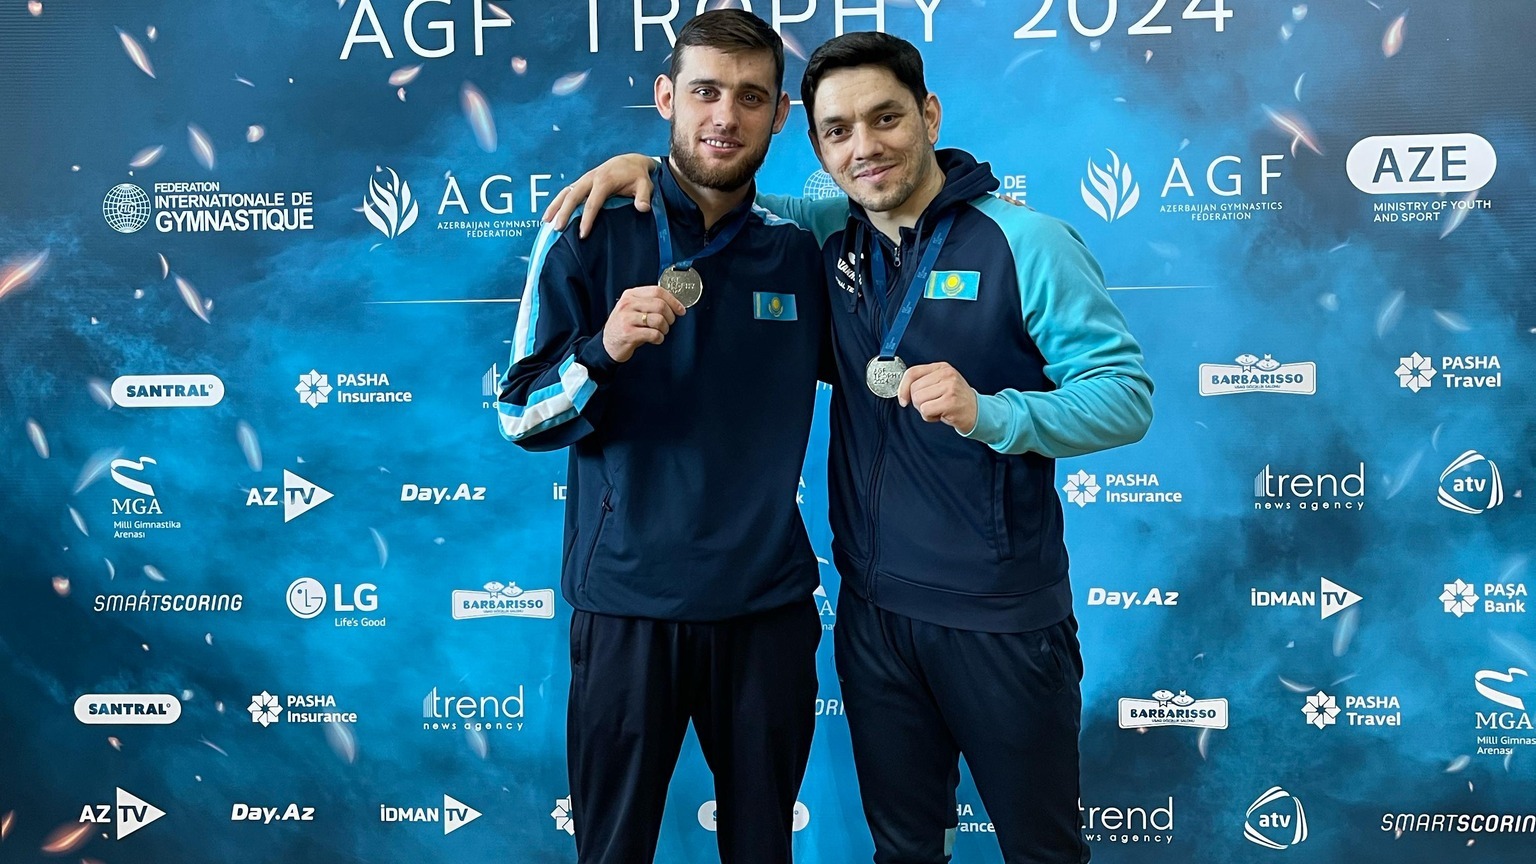 Карагандинский батутист завоевал серебро на чемпионате мира